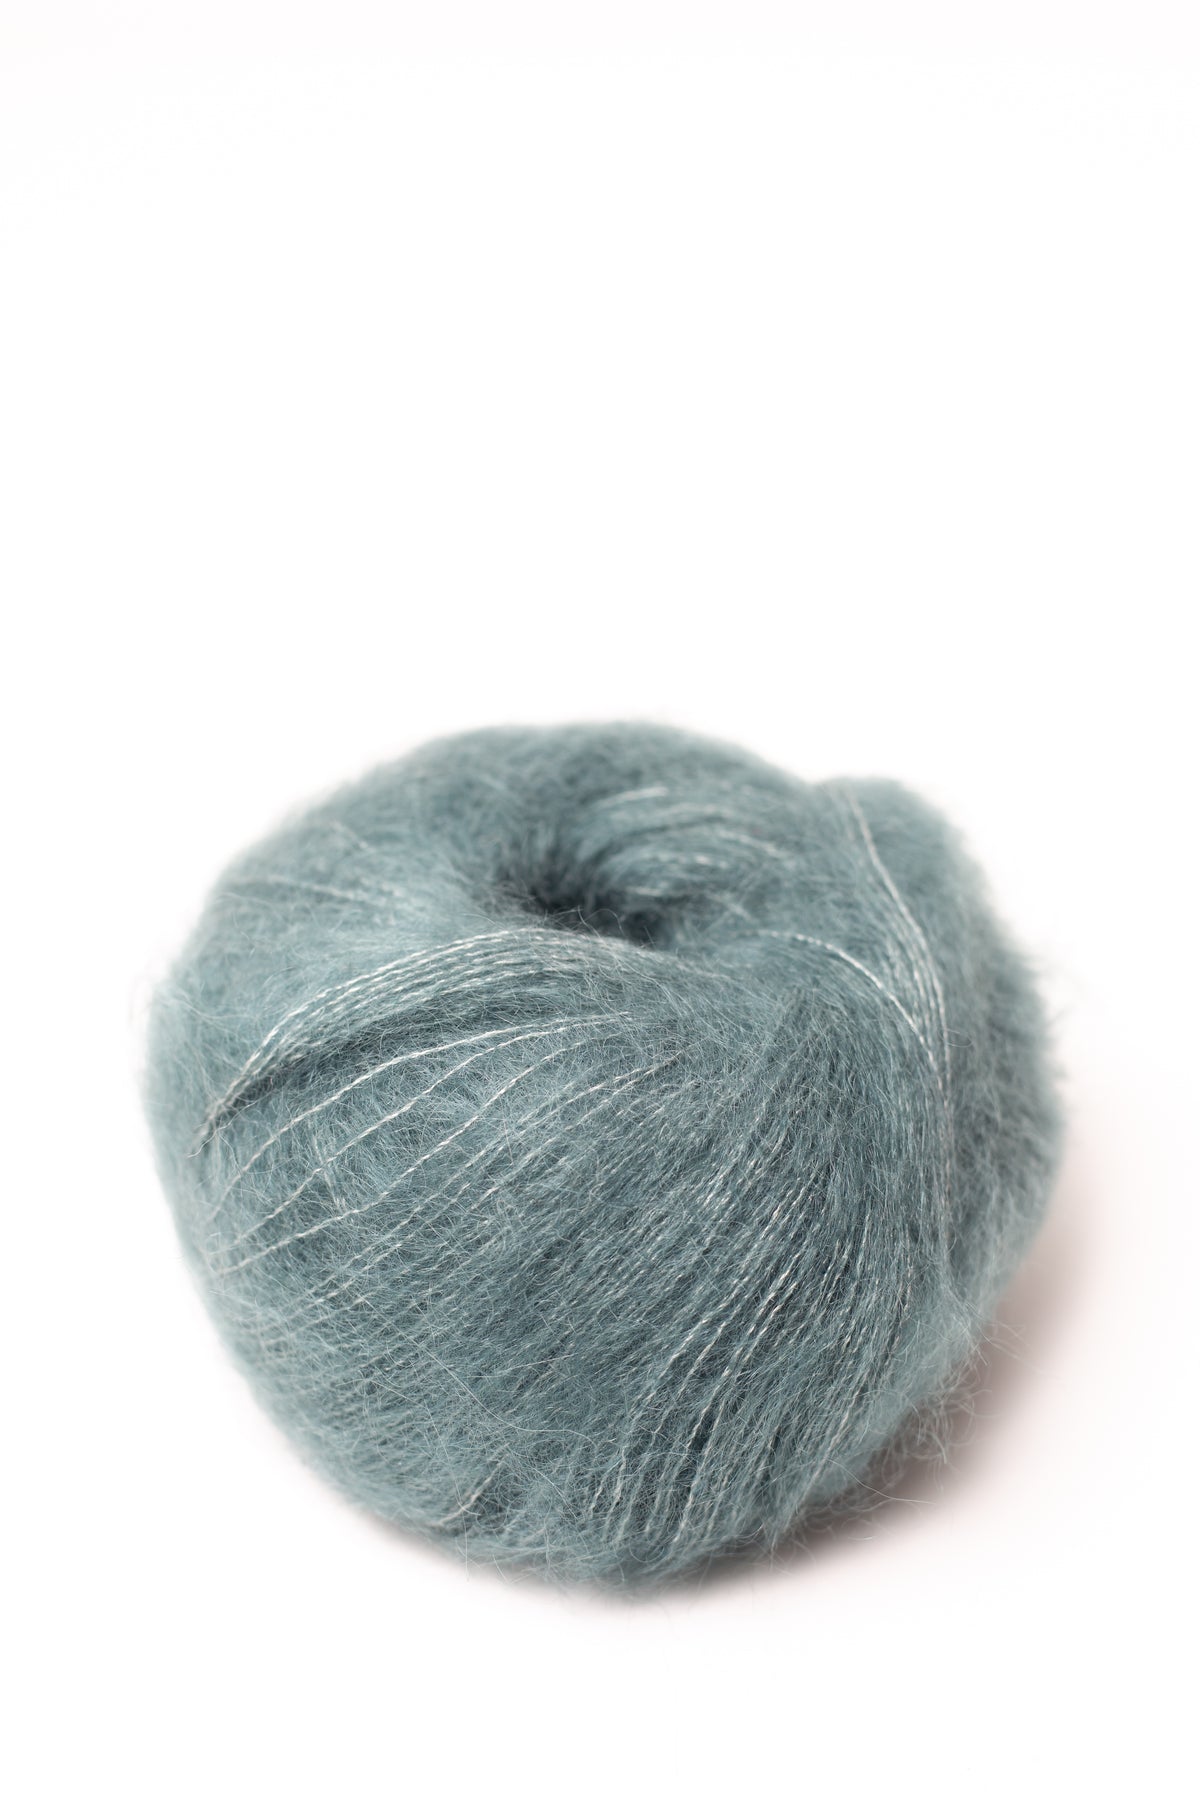 Kid Silk Drops | Shop Yarn Online Today - Beehive Wool Shop